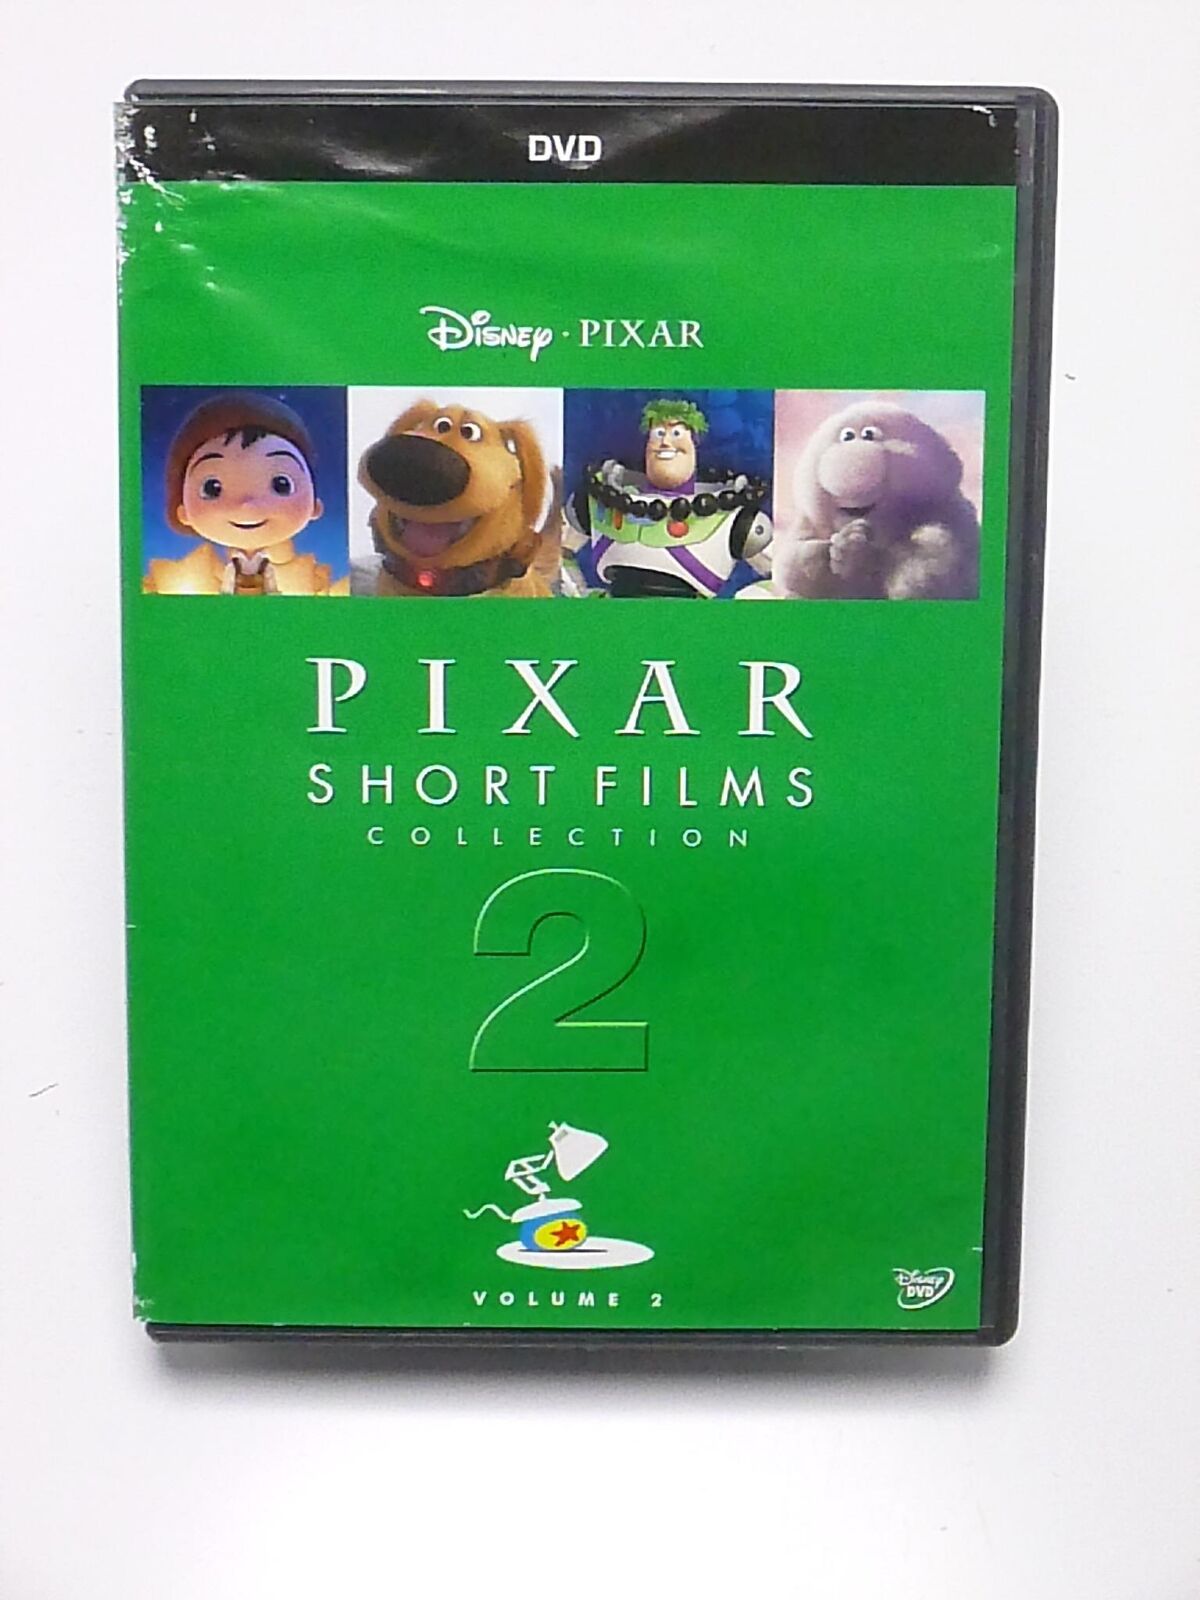 Pixar Short Films Collection - Volume 2 (DVD, Disney Pixar) - K0107